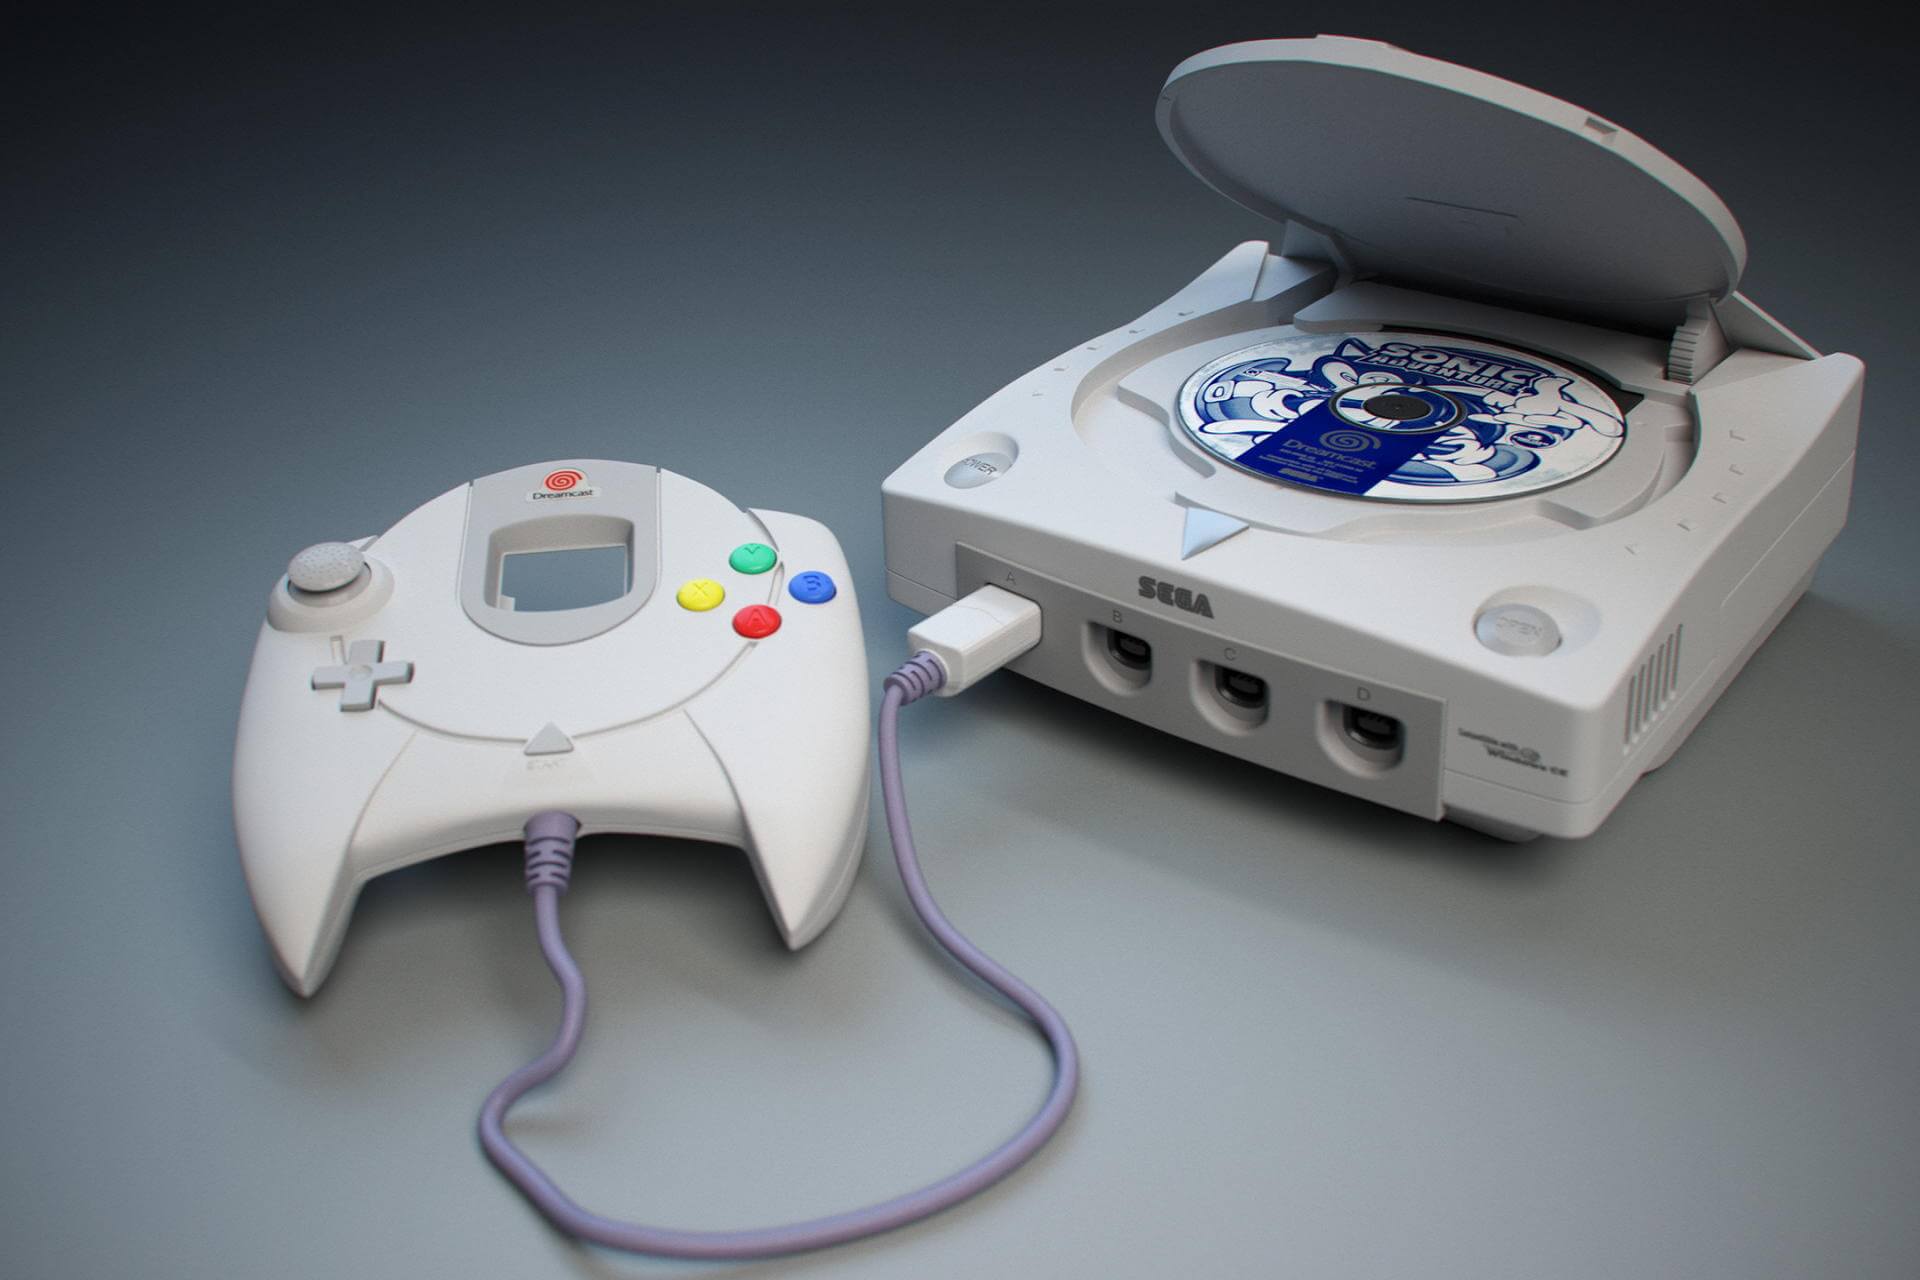 5 best Sega Dreamcast emulators for Windows 10